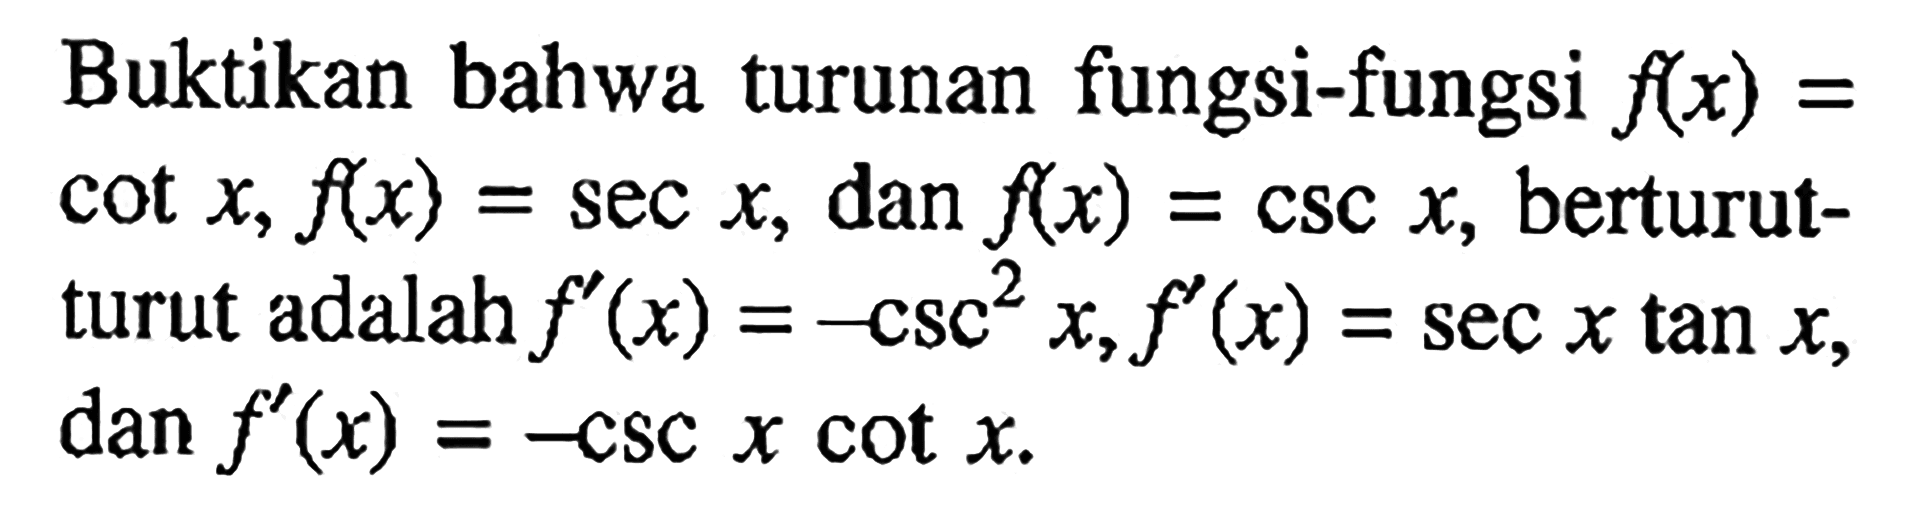 Buktikan bahwa turunan fungsi-fungsi f(x) = cot x, f(x) sec x, dan f(x) CSC x, berturut- turut adalah f' (x) = -CSc^2 x,f= sec x tan x, dan f' (x) = -CSC X Cot x.